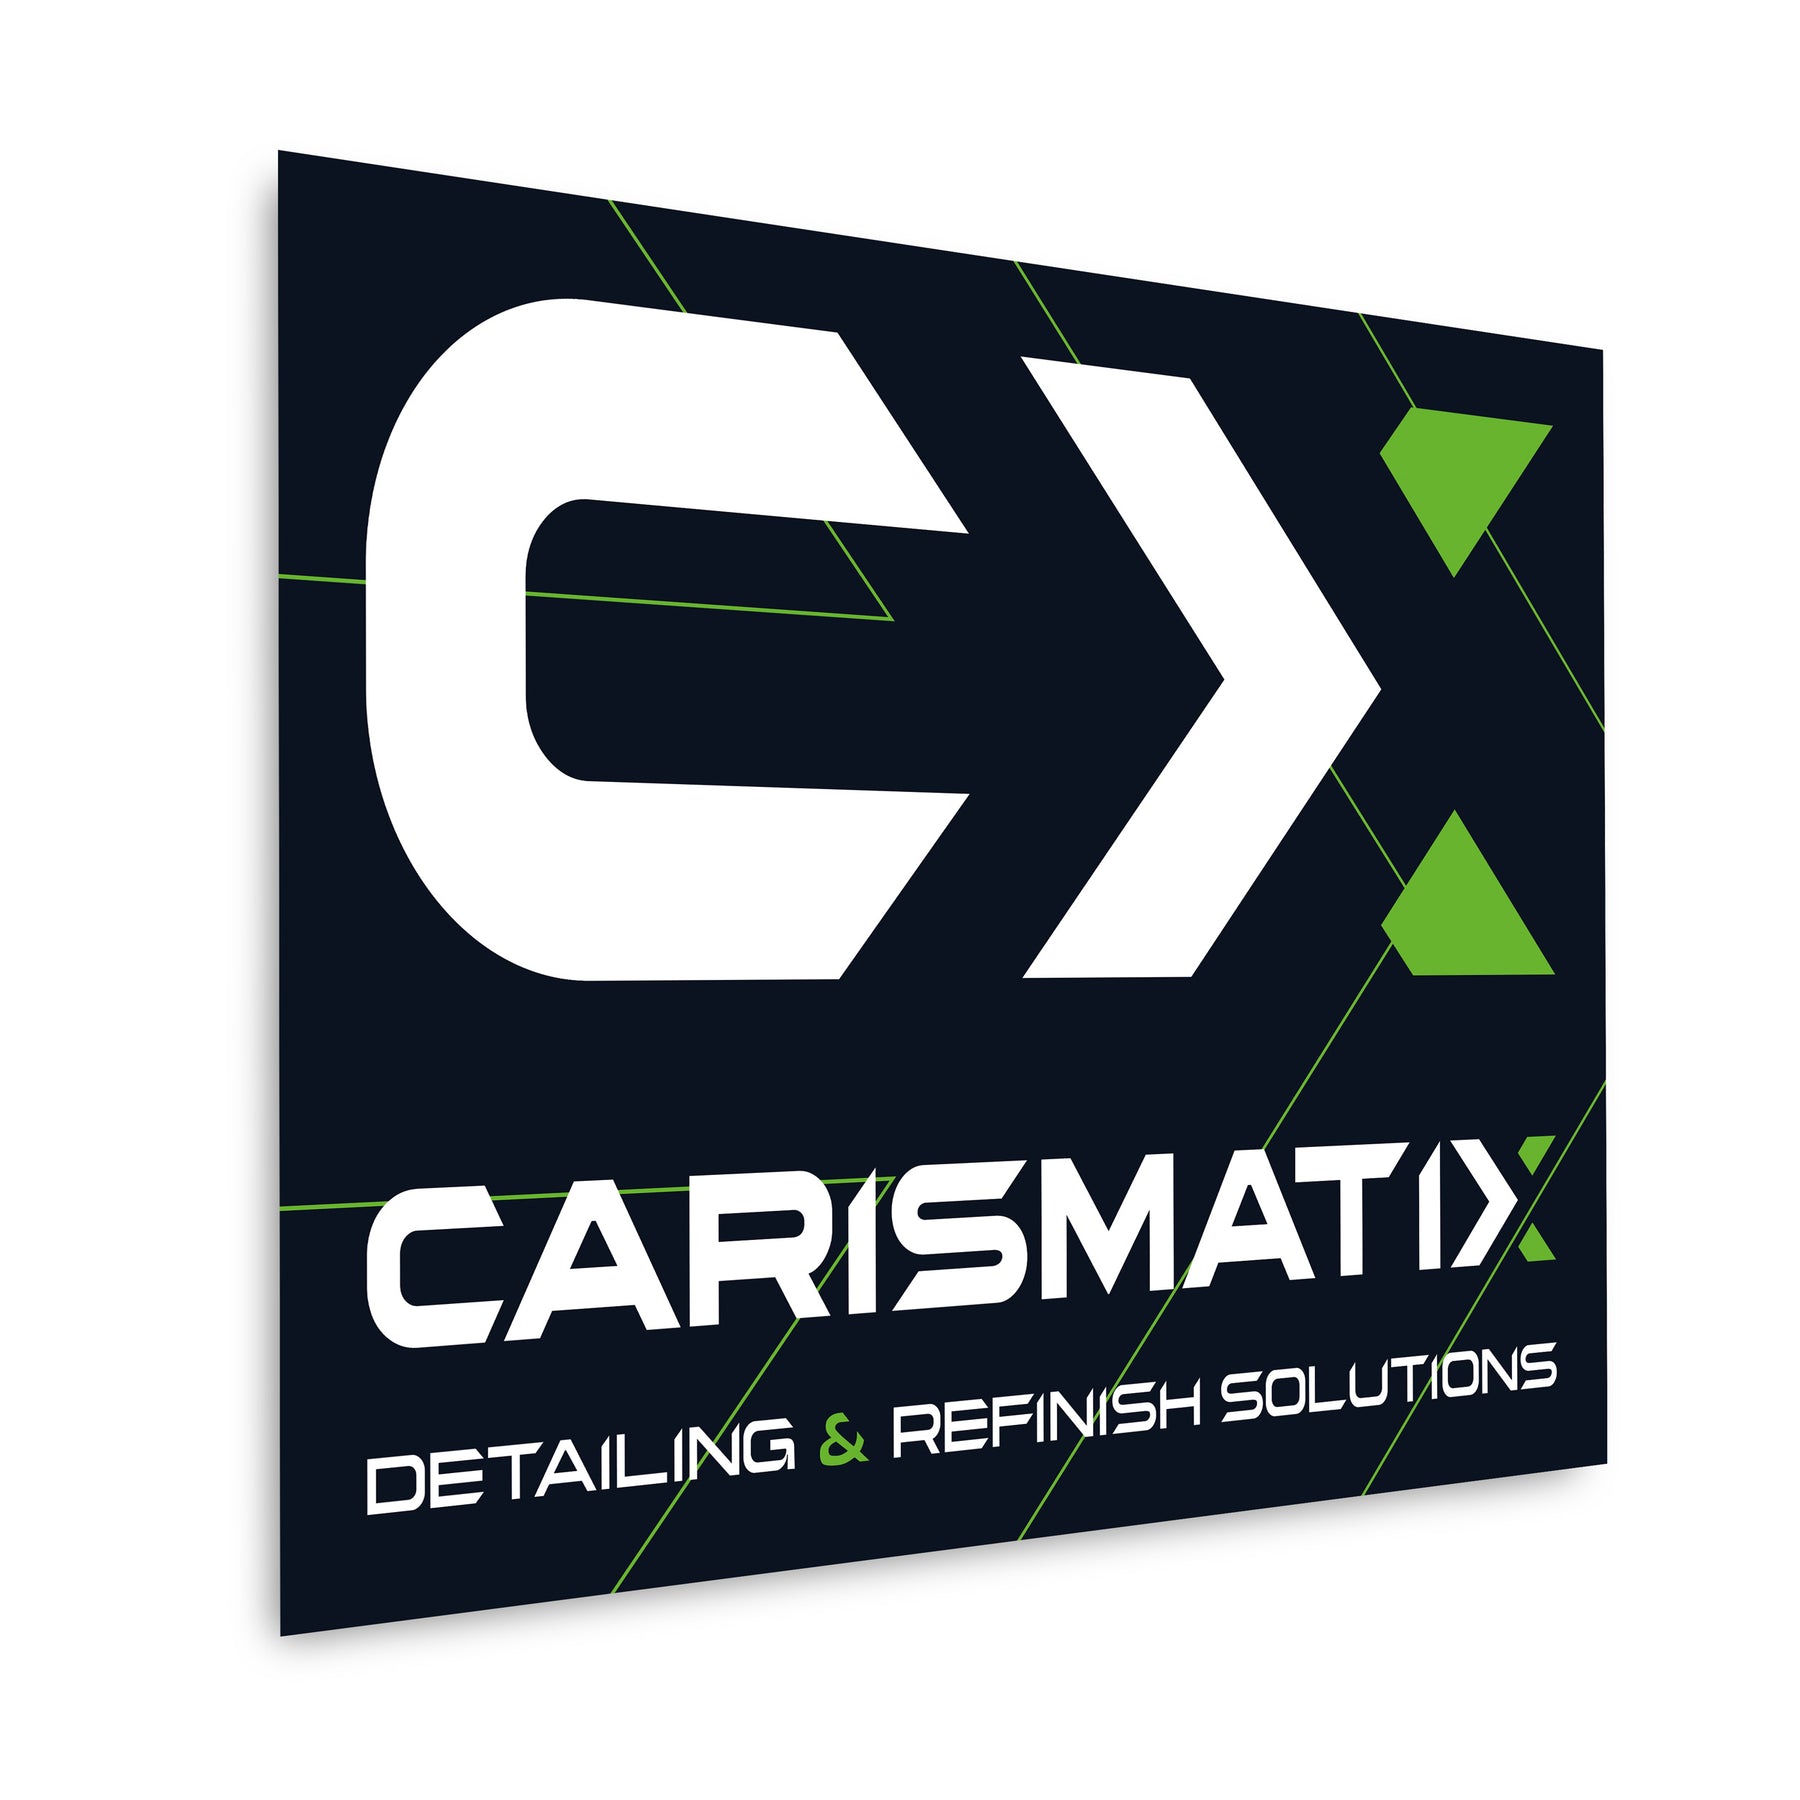 CARISMATIX Adesivo Logo